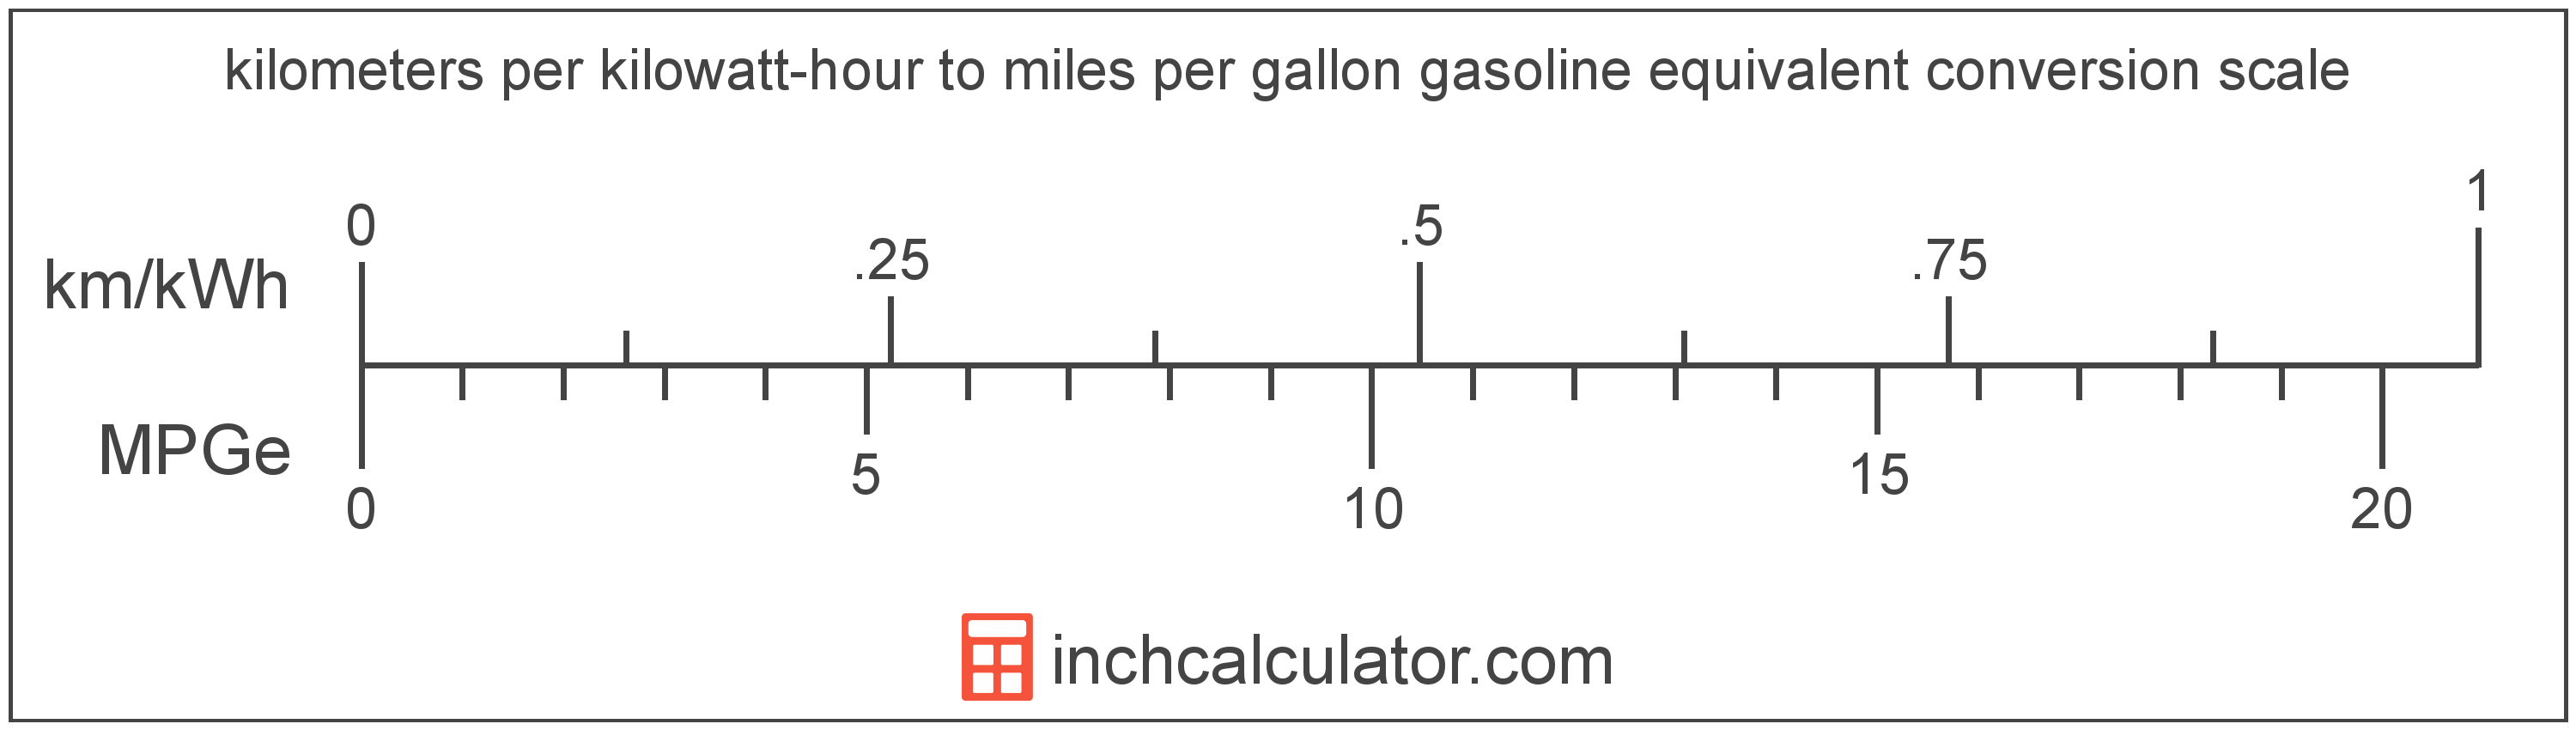 conversion scale showing kilometers per kilowatt-hour and equivalent miles per gallon gasoline equivalent electric car efficiency values